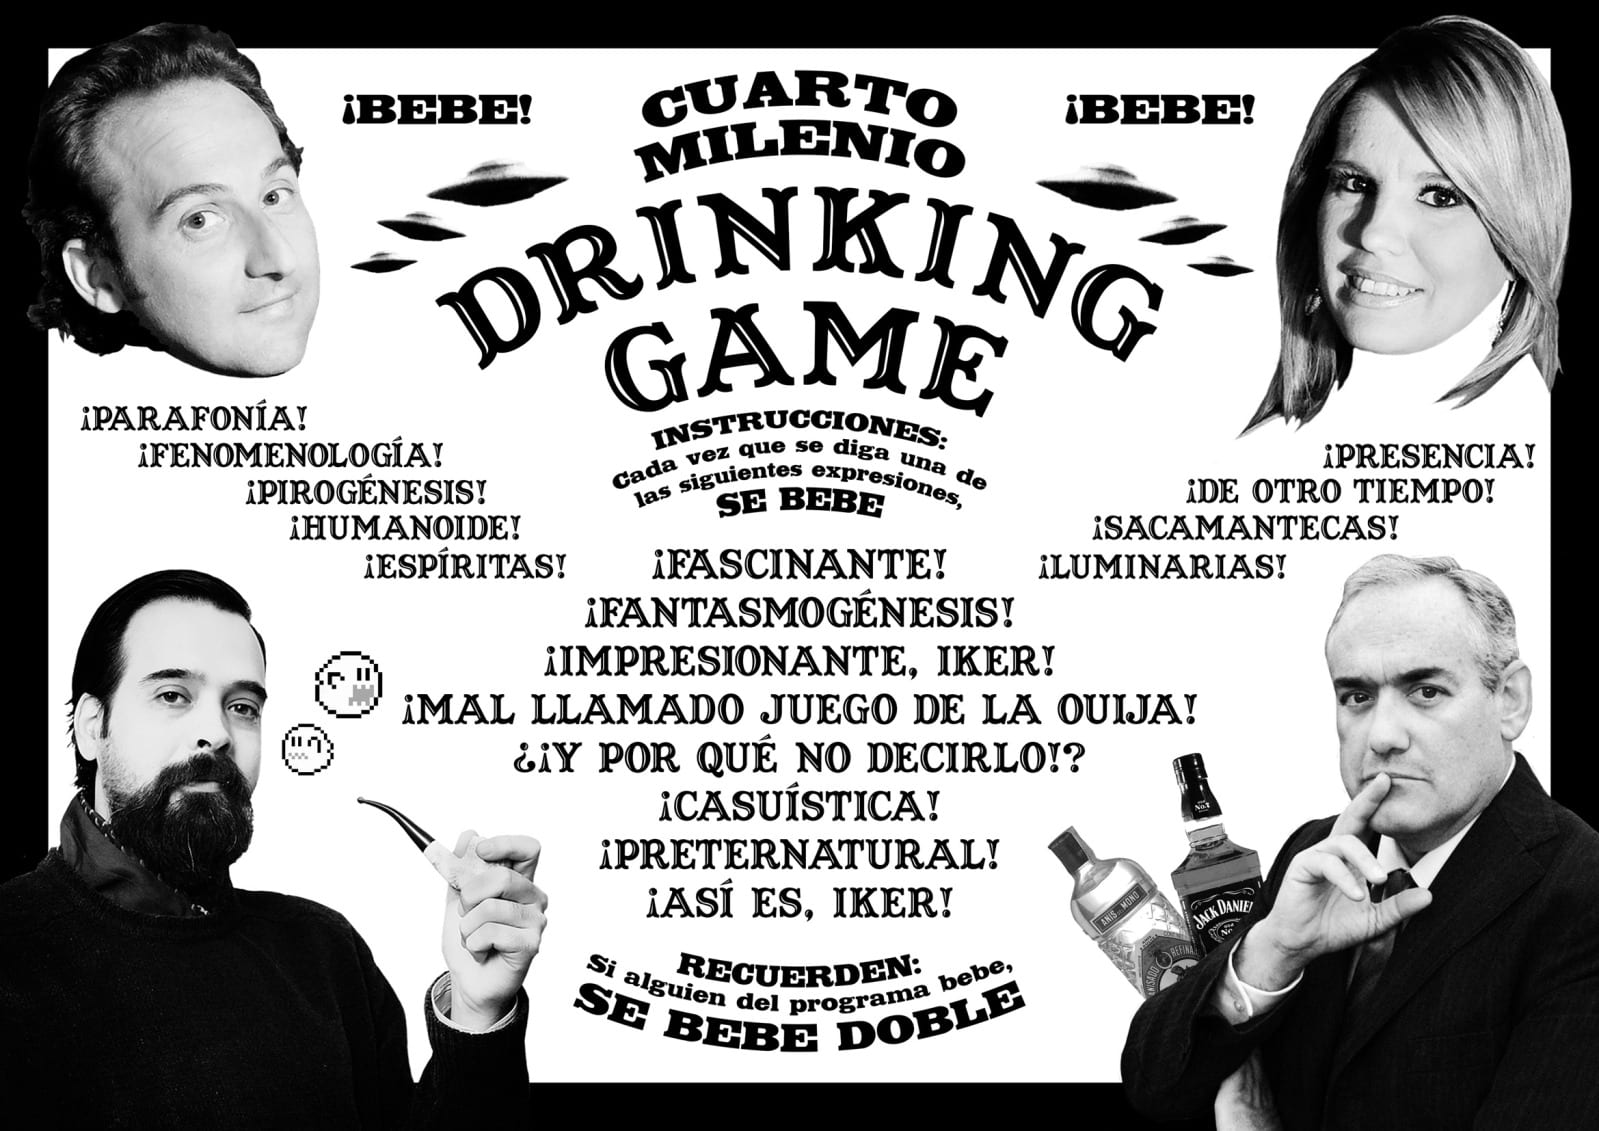 'Cuarto Milenio Drinking Game'.